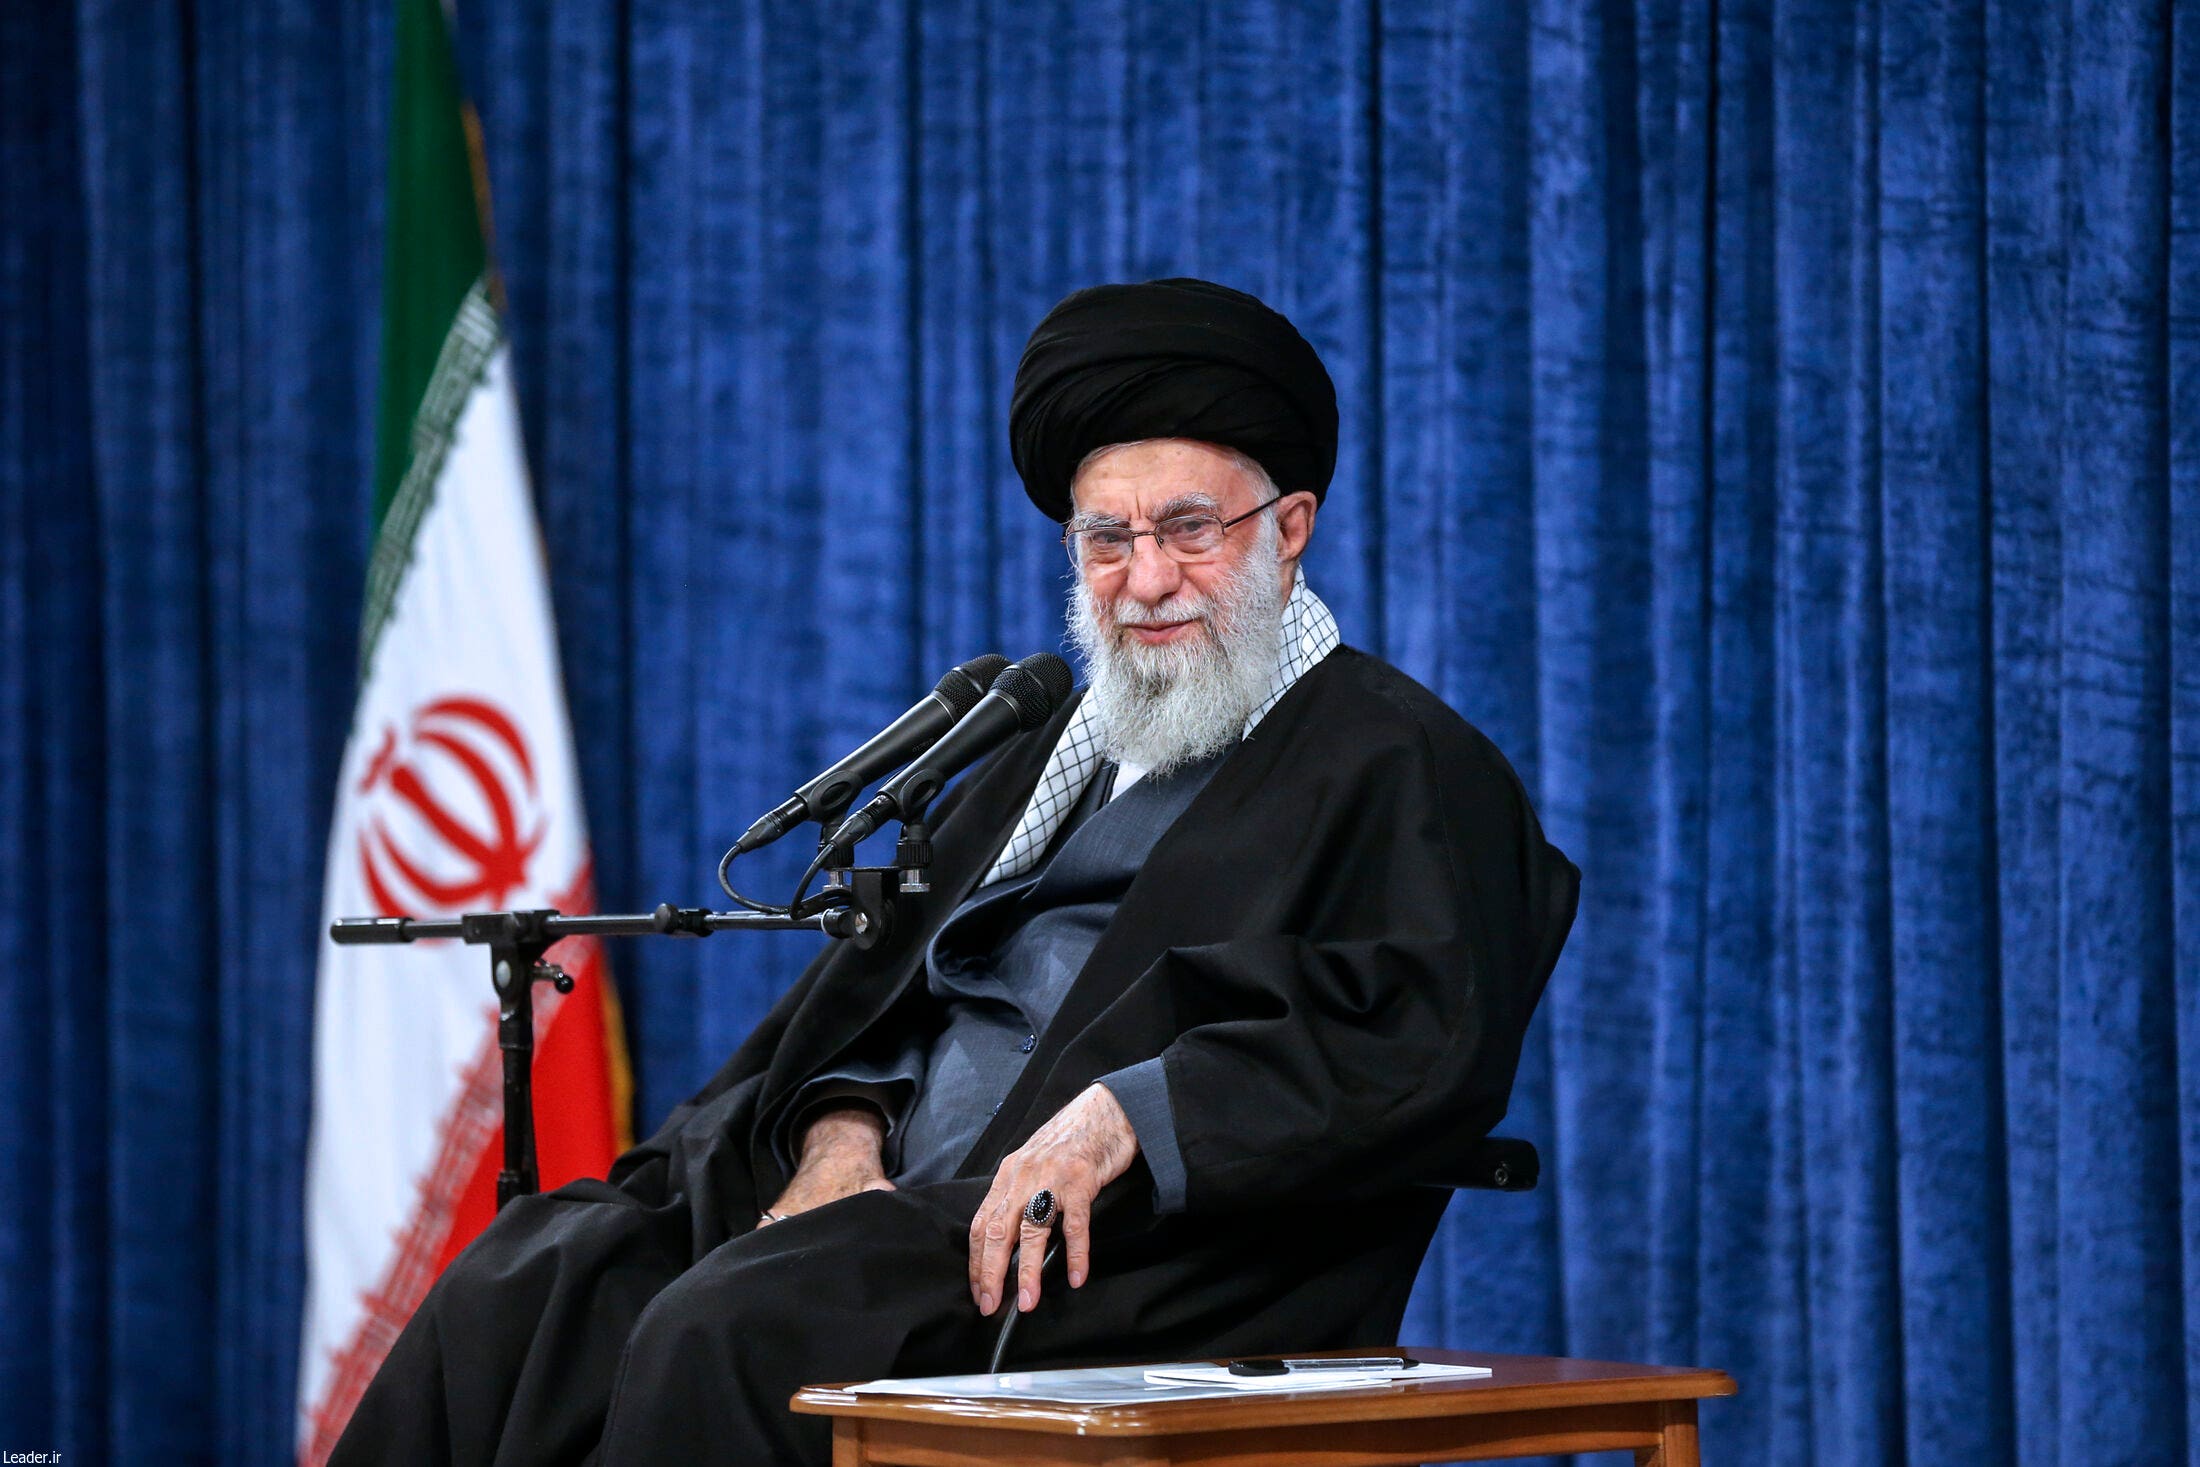 Iranian Supreme Leader Ayatollah Ali Khamenei had threatened to attack Israel